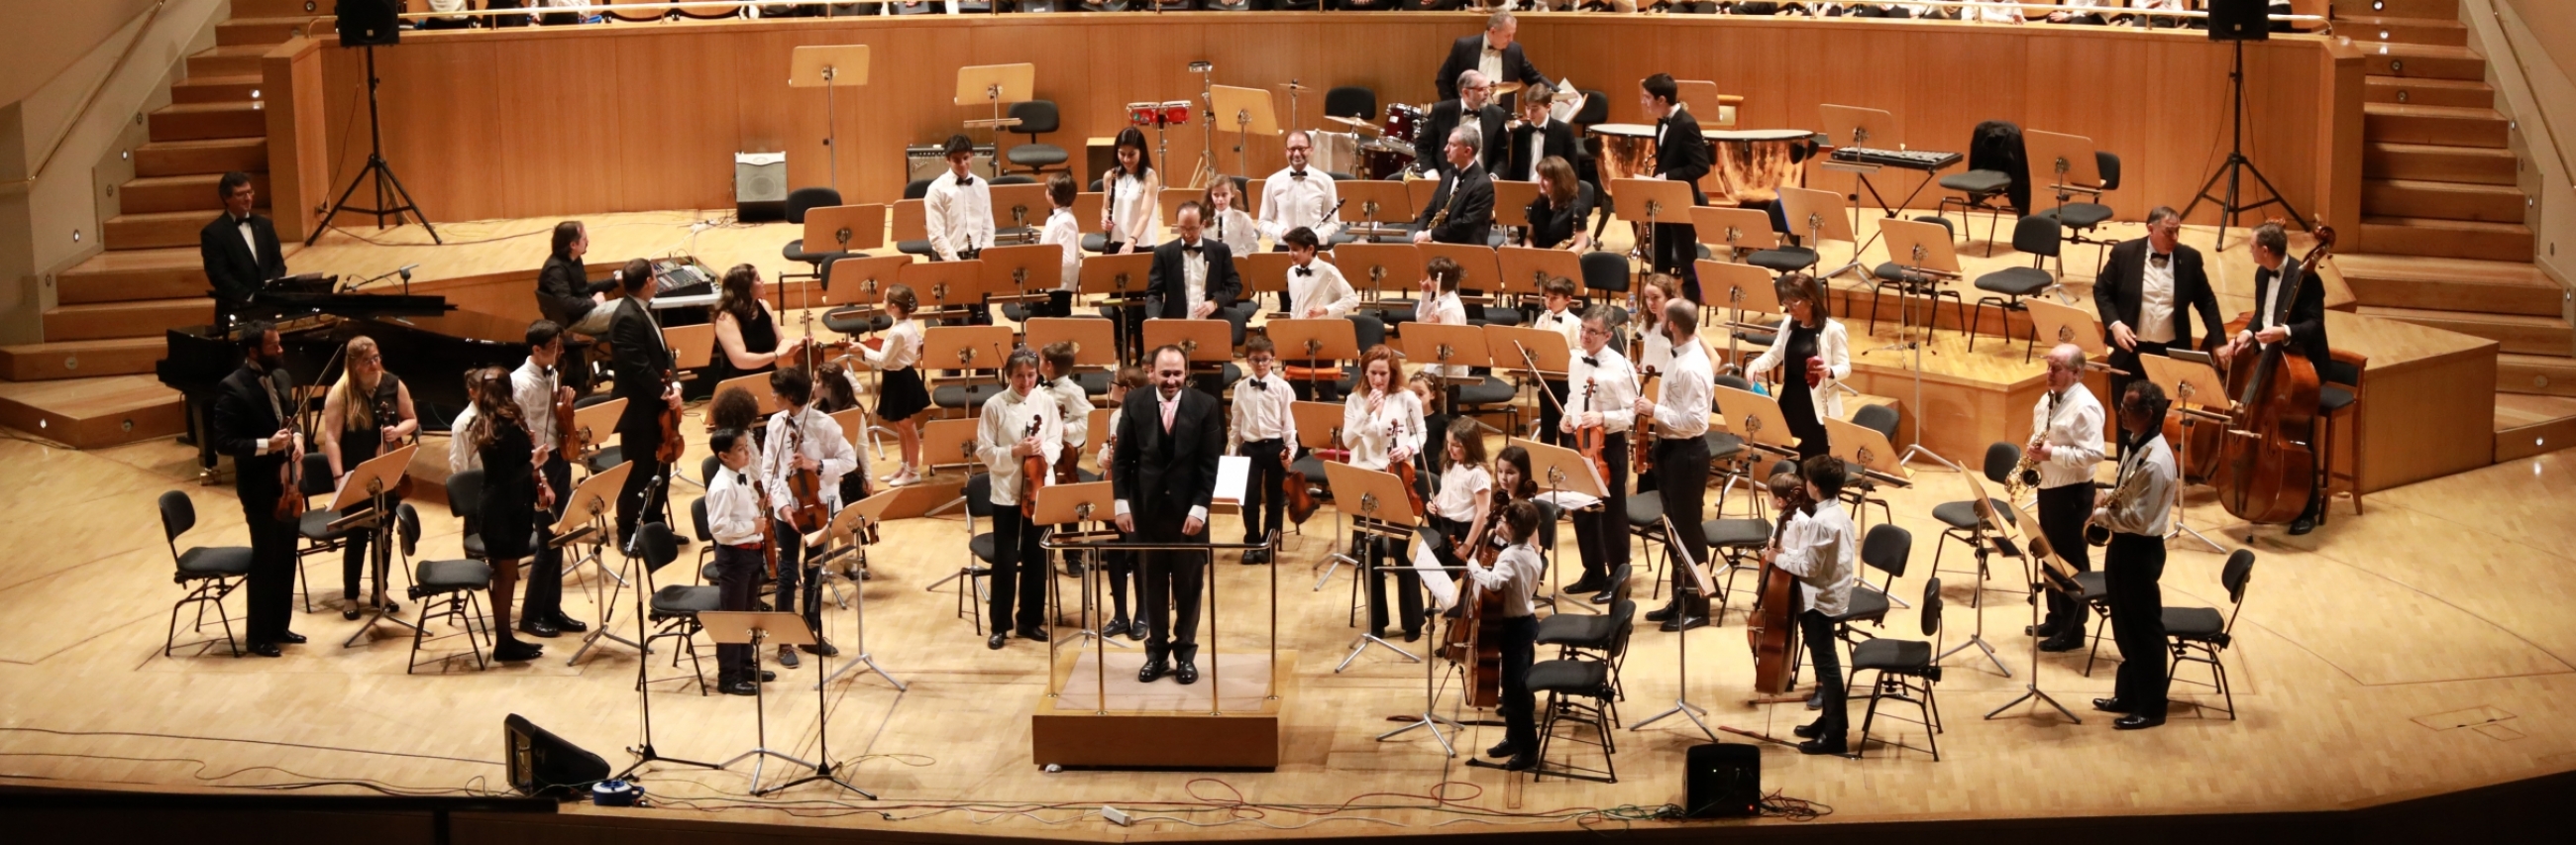 Orquesta Filarmónica Mundo Joven